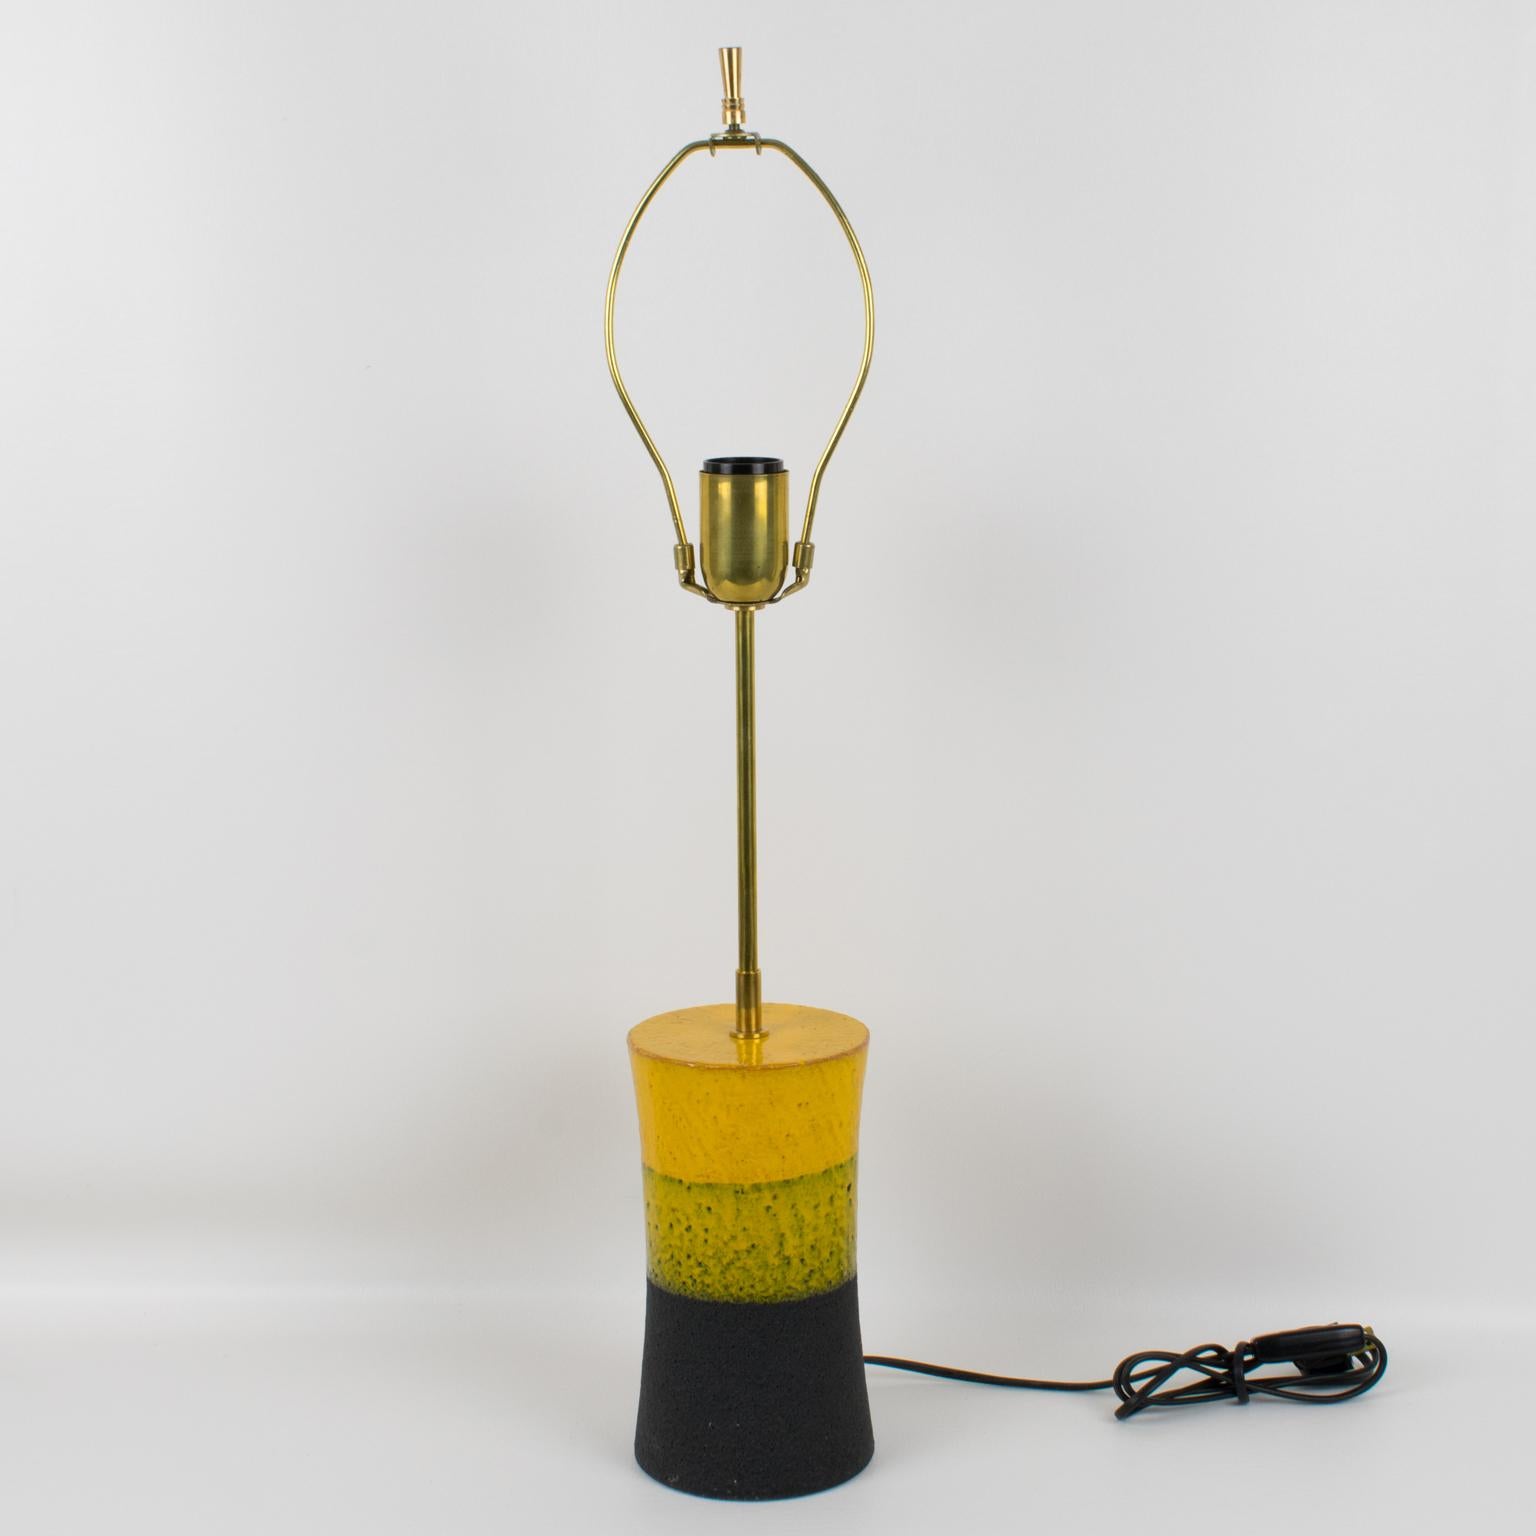 Italian Aldo Londi for Bitossi Italy Mondrian Design Ceramic Table Lamp, 1960s